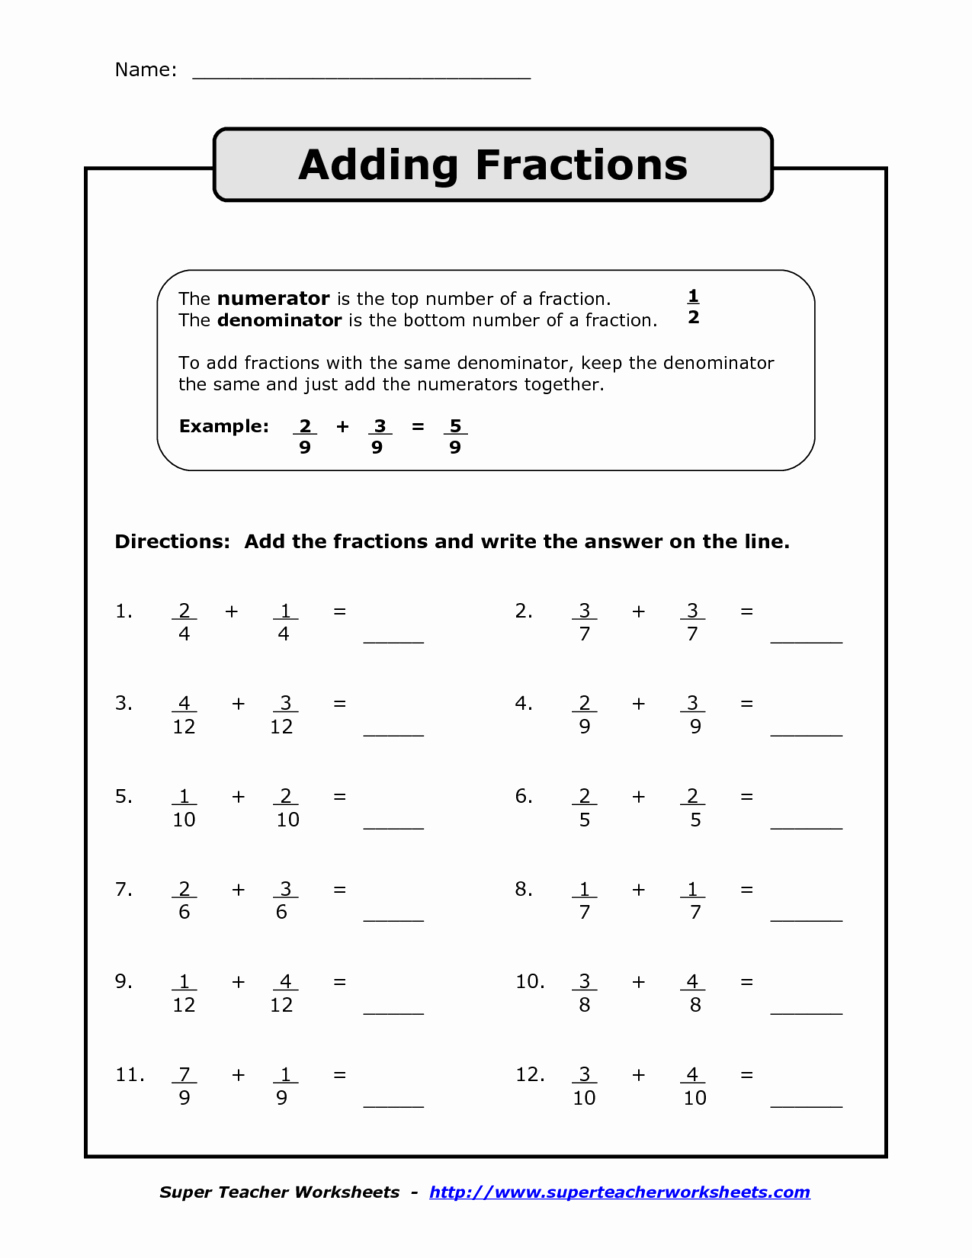 Adding Fractions Worksheet Pdf Best Of Math Multiplication Worksheets Multiplication Facts to 144